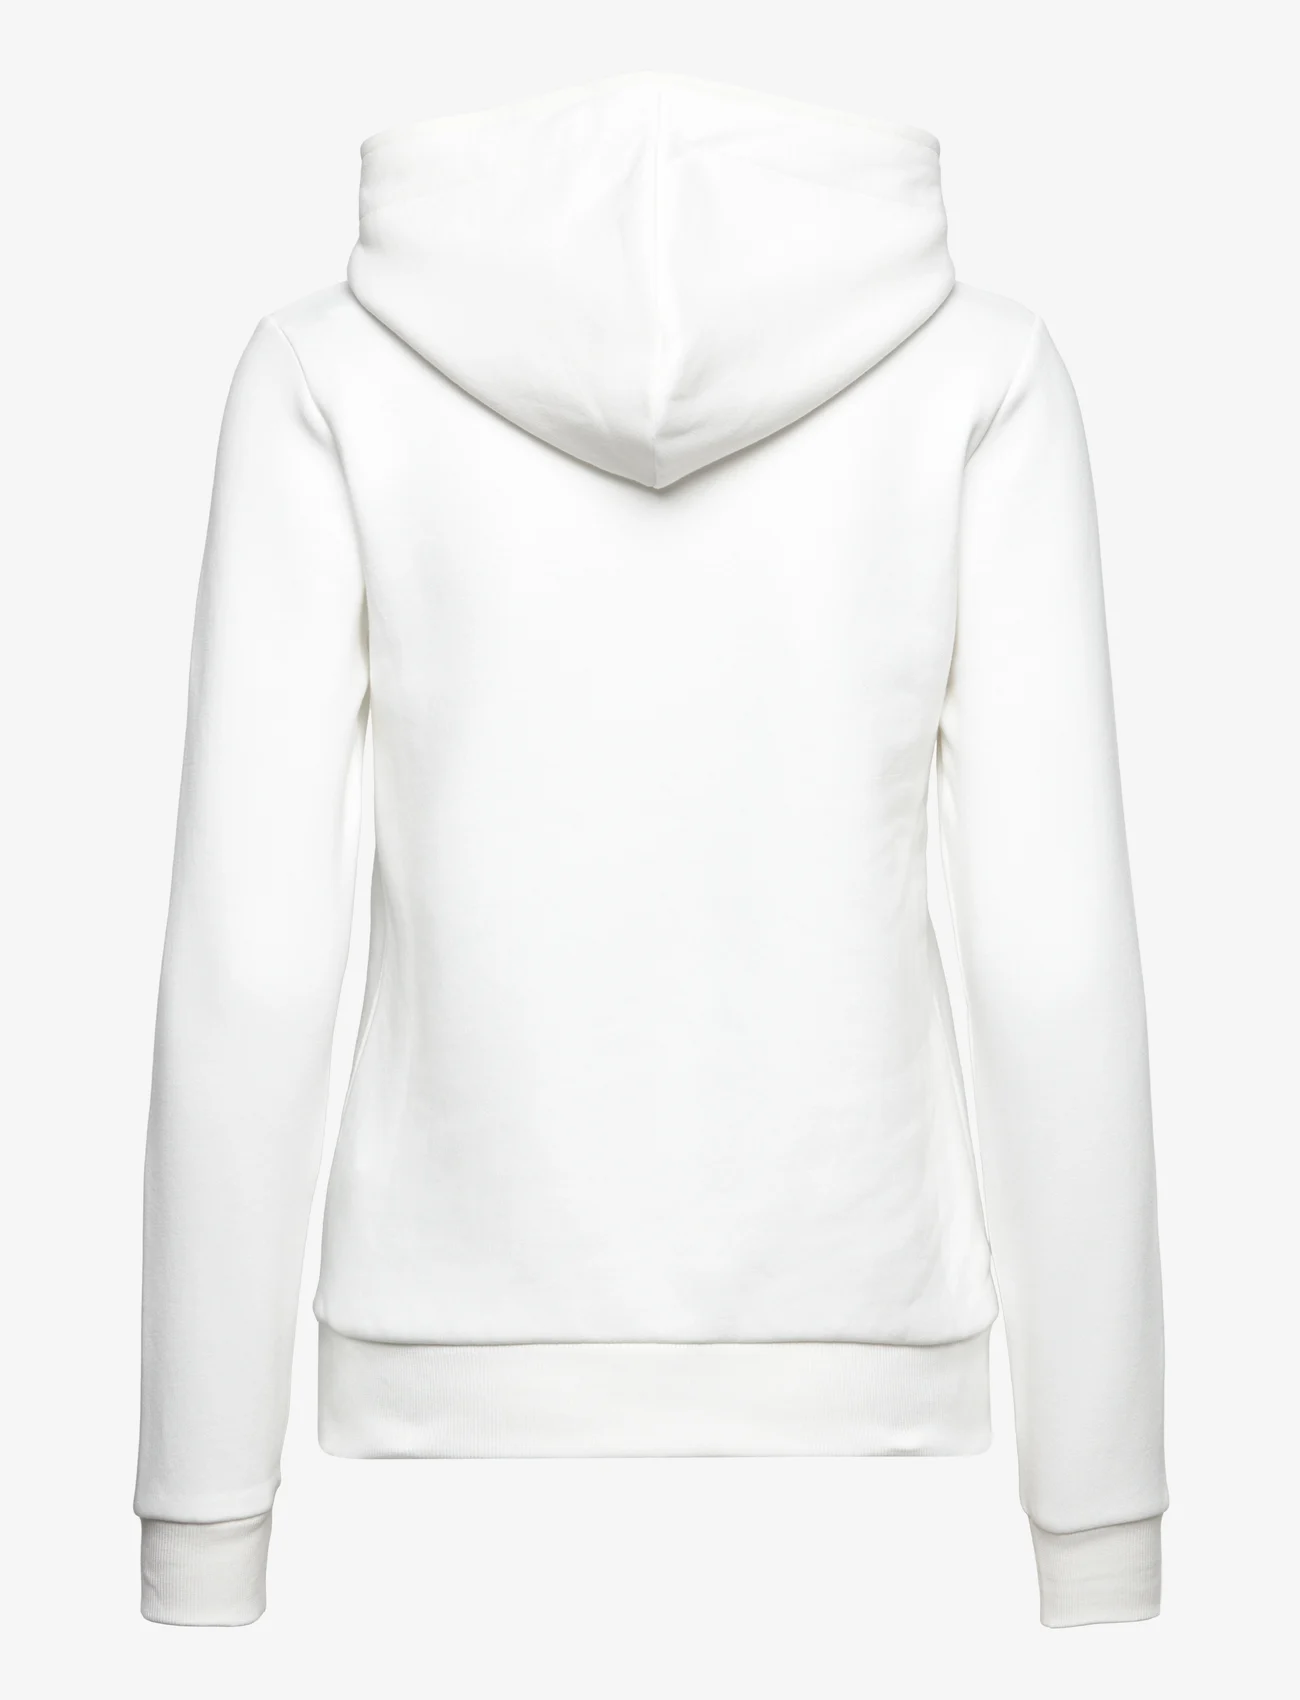 Peak Performance - W Logo Hood Sweatshirt-OFFWHITE - hoodies - offwhite - 1